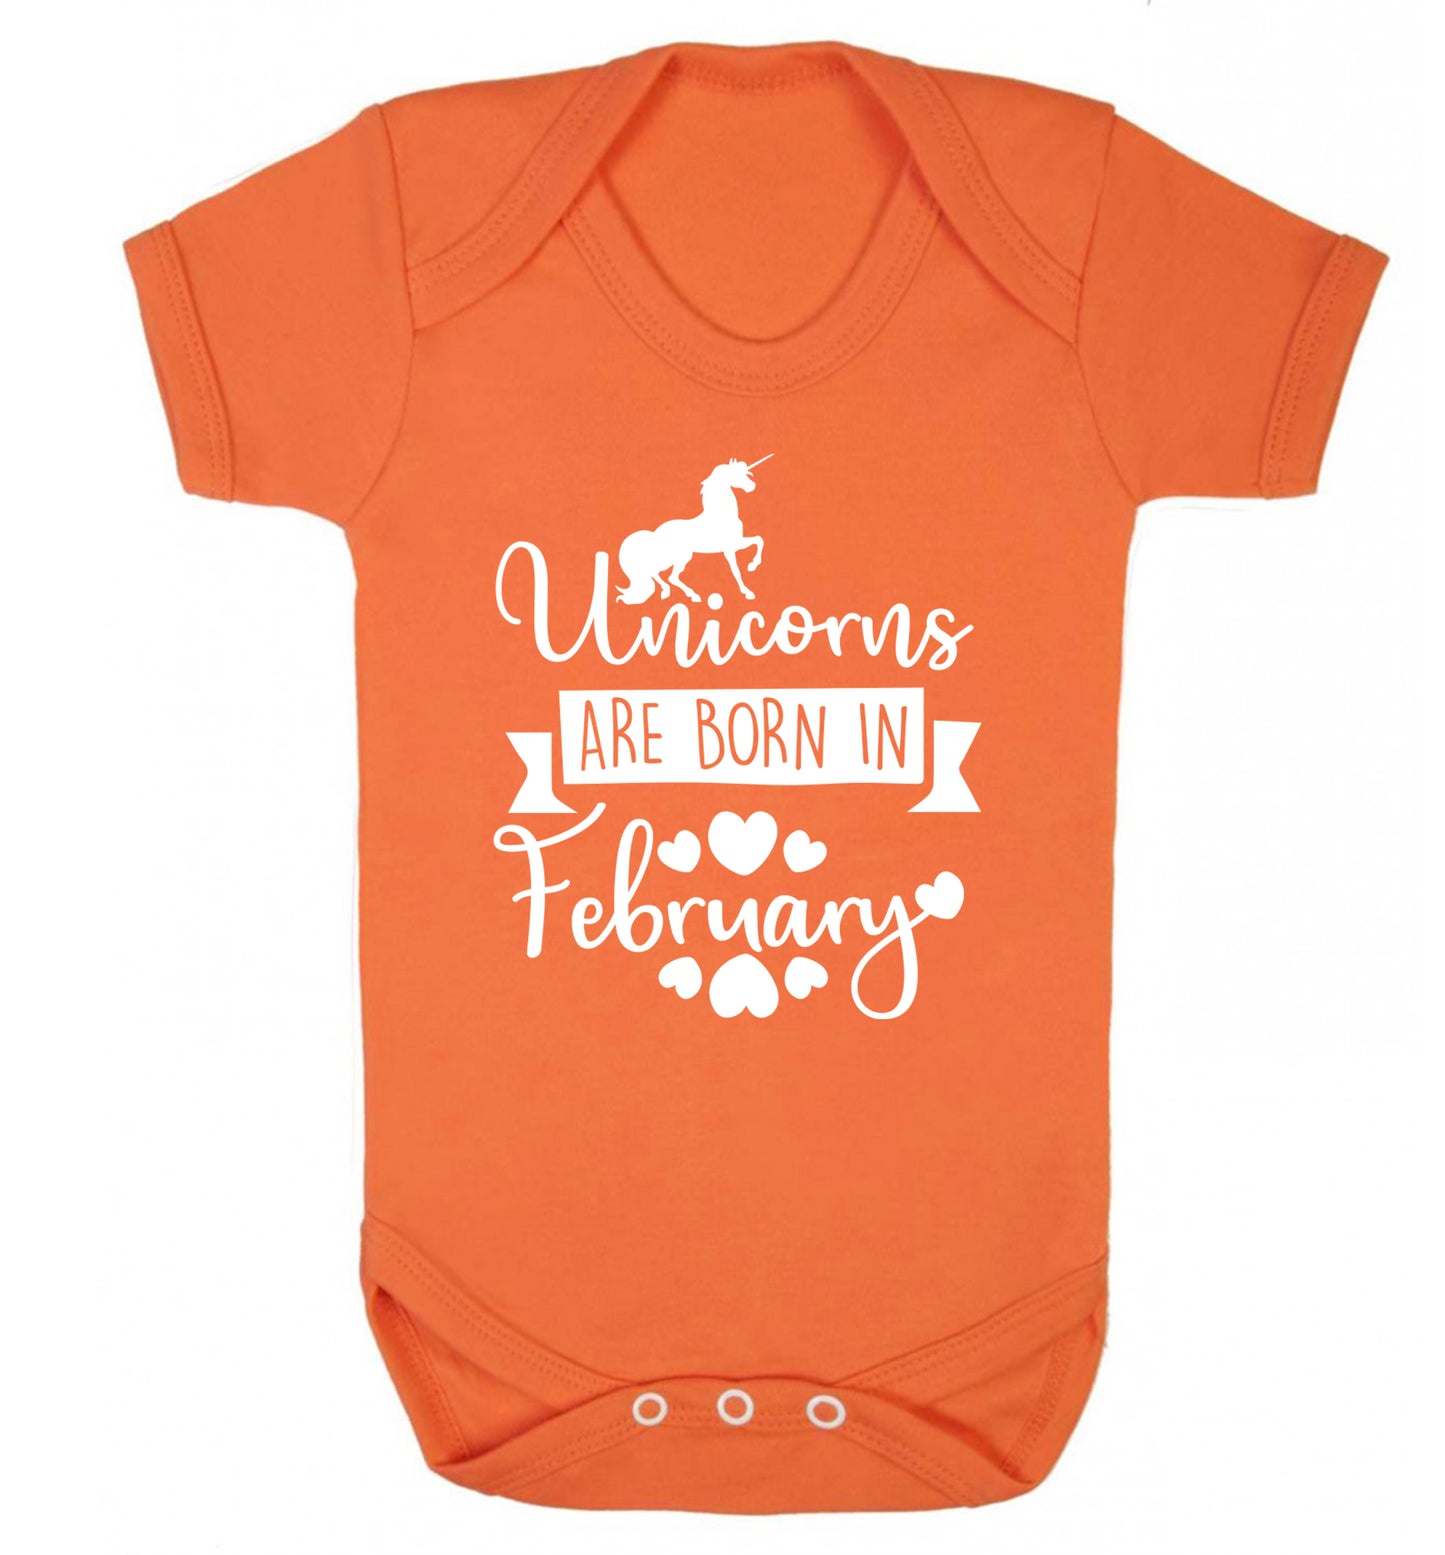 Unicorns are born in February Baby Vest orange 18-24 months